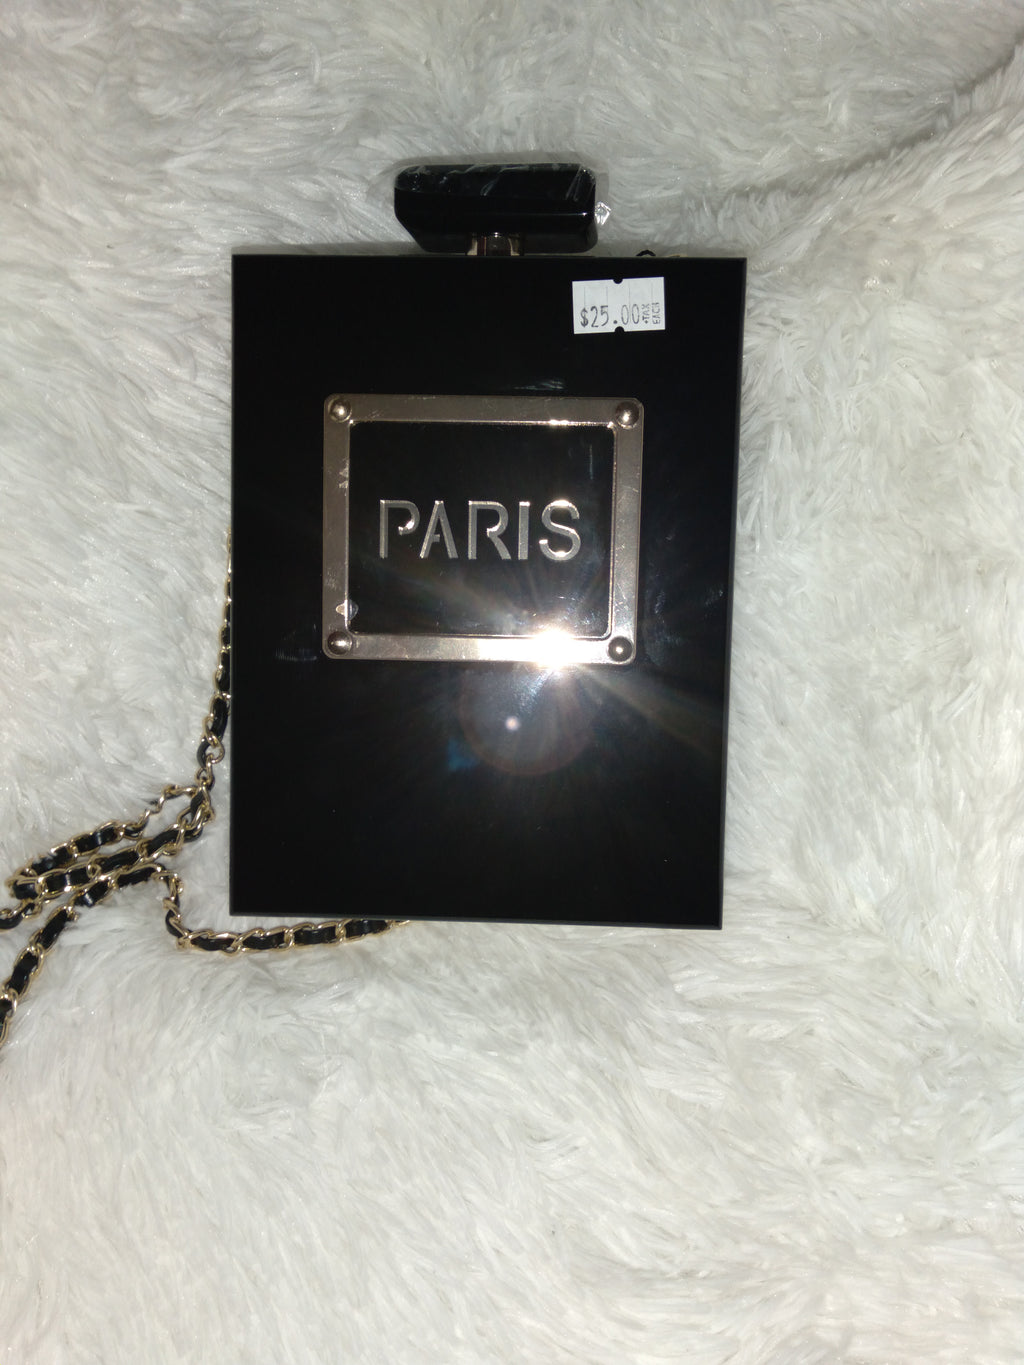 Paris bag